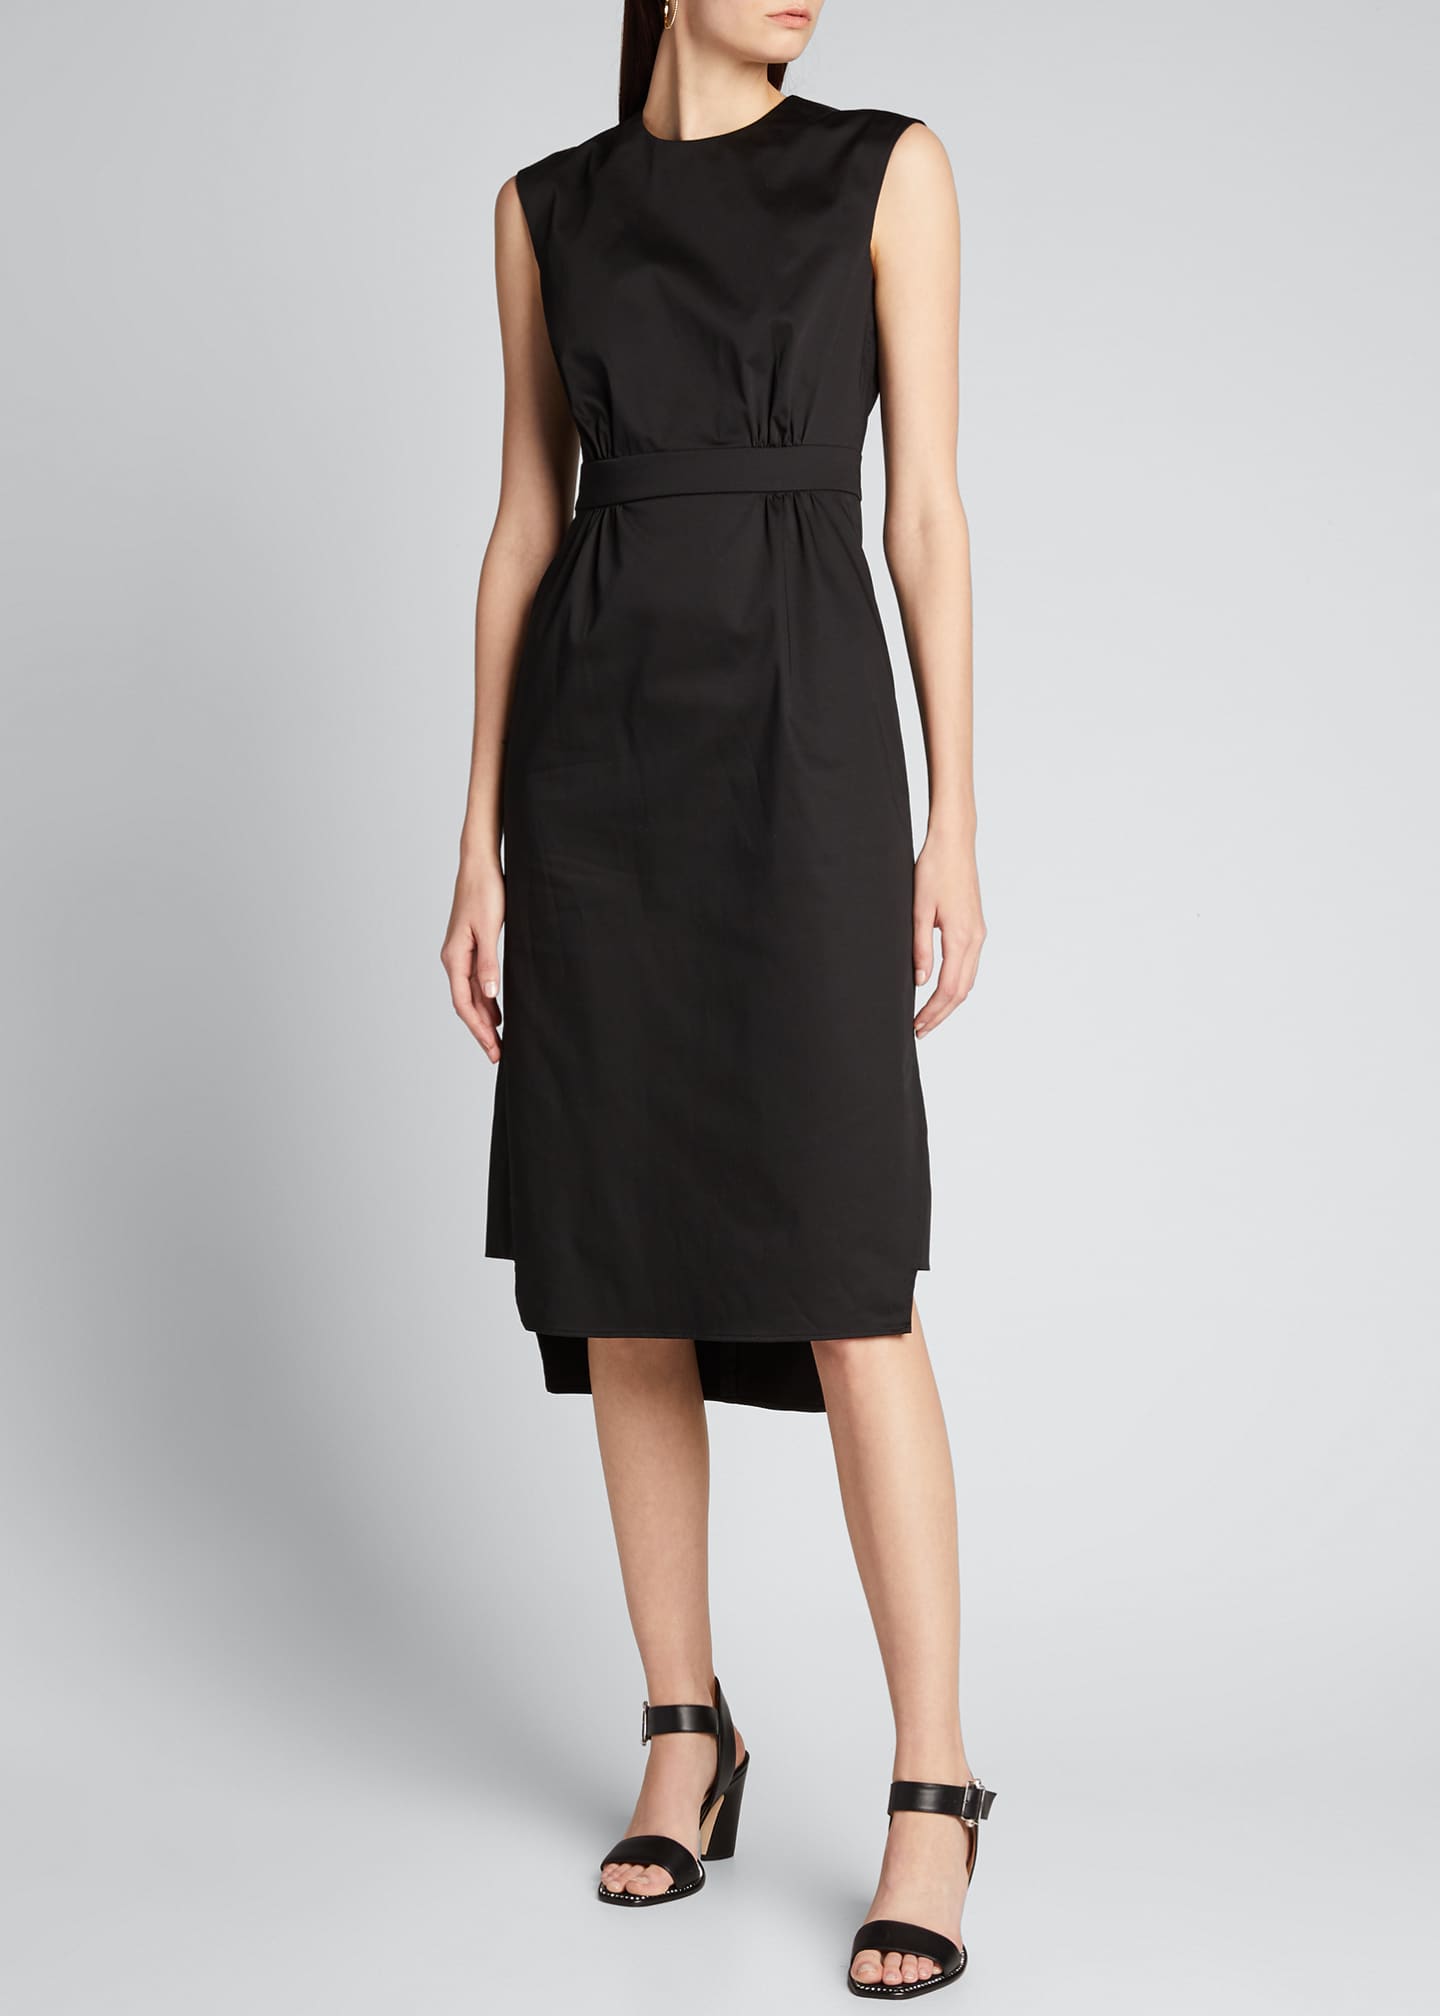 Prada Sateen Sleeveless Suit Dress - Bergdorf Goodman